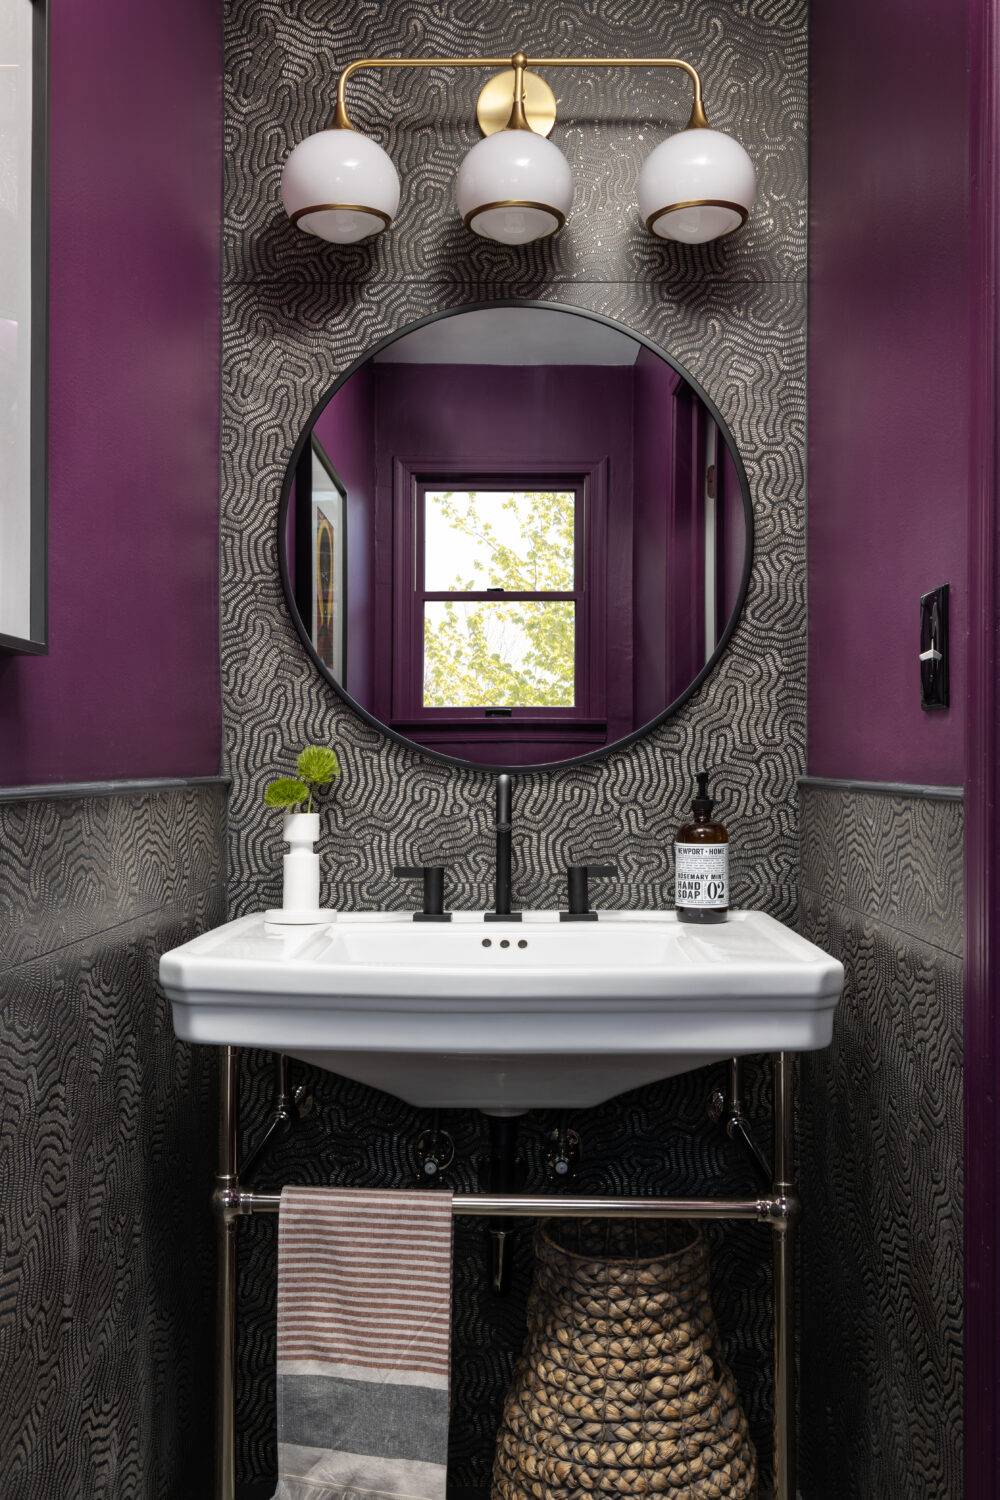 Dark purple and black and gold tile sink backsplash. White sink and circular mirror.